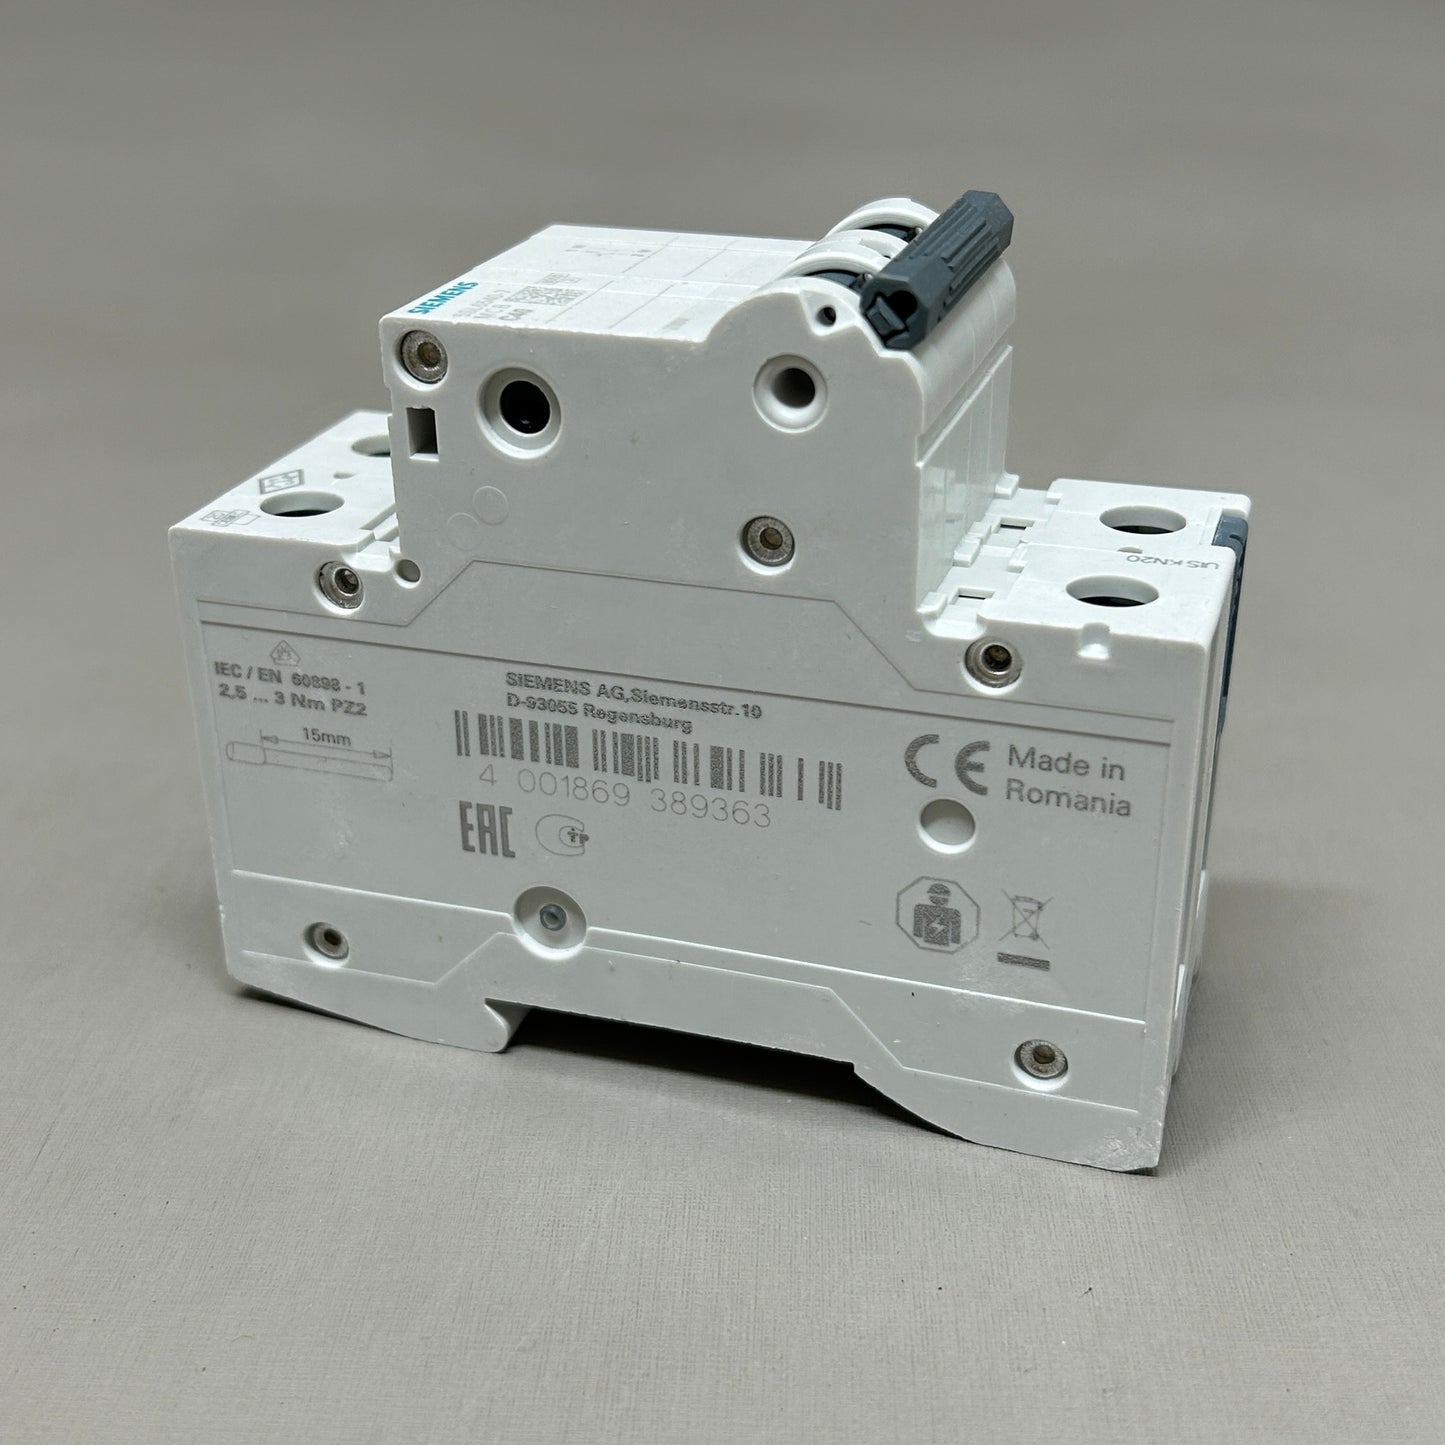 SIEMENS Miniature Circuit Breaker 230V 6KA Off-White 5SL6540-7 (New)